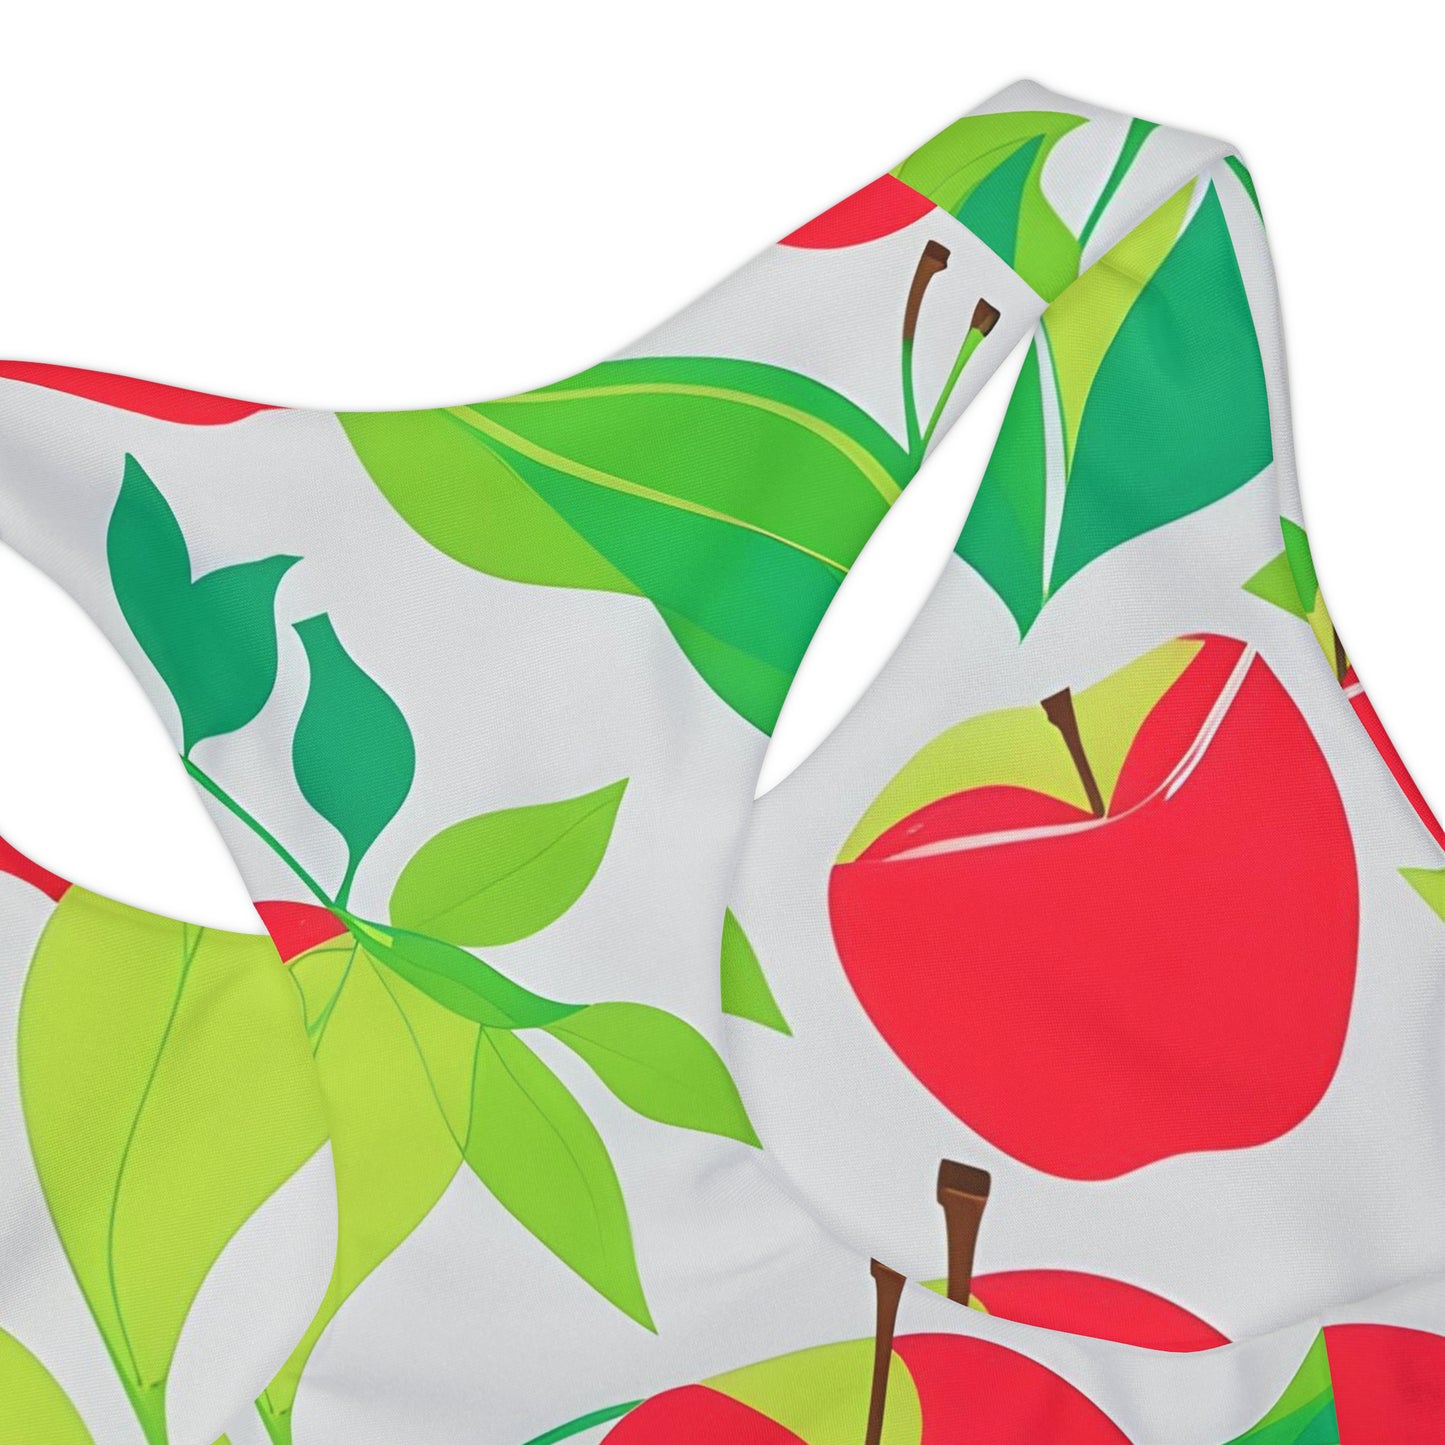 Organic Apples Pattern Design